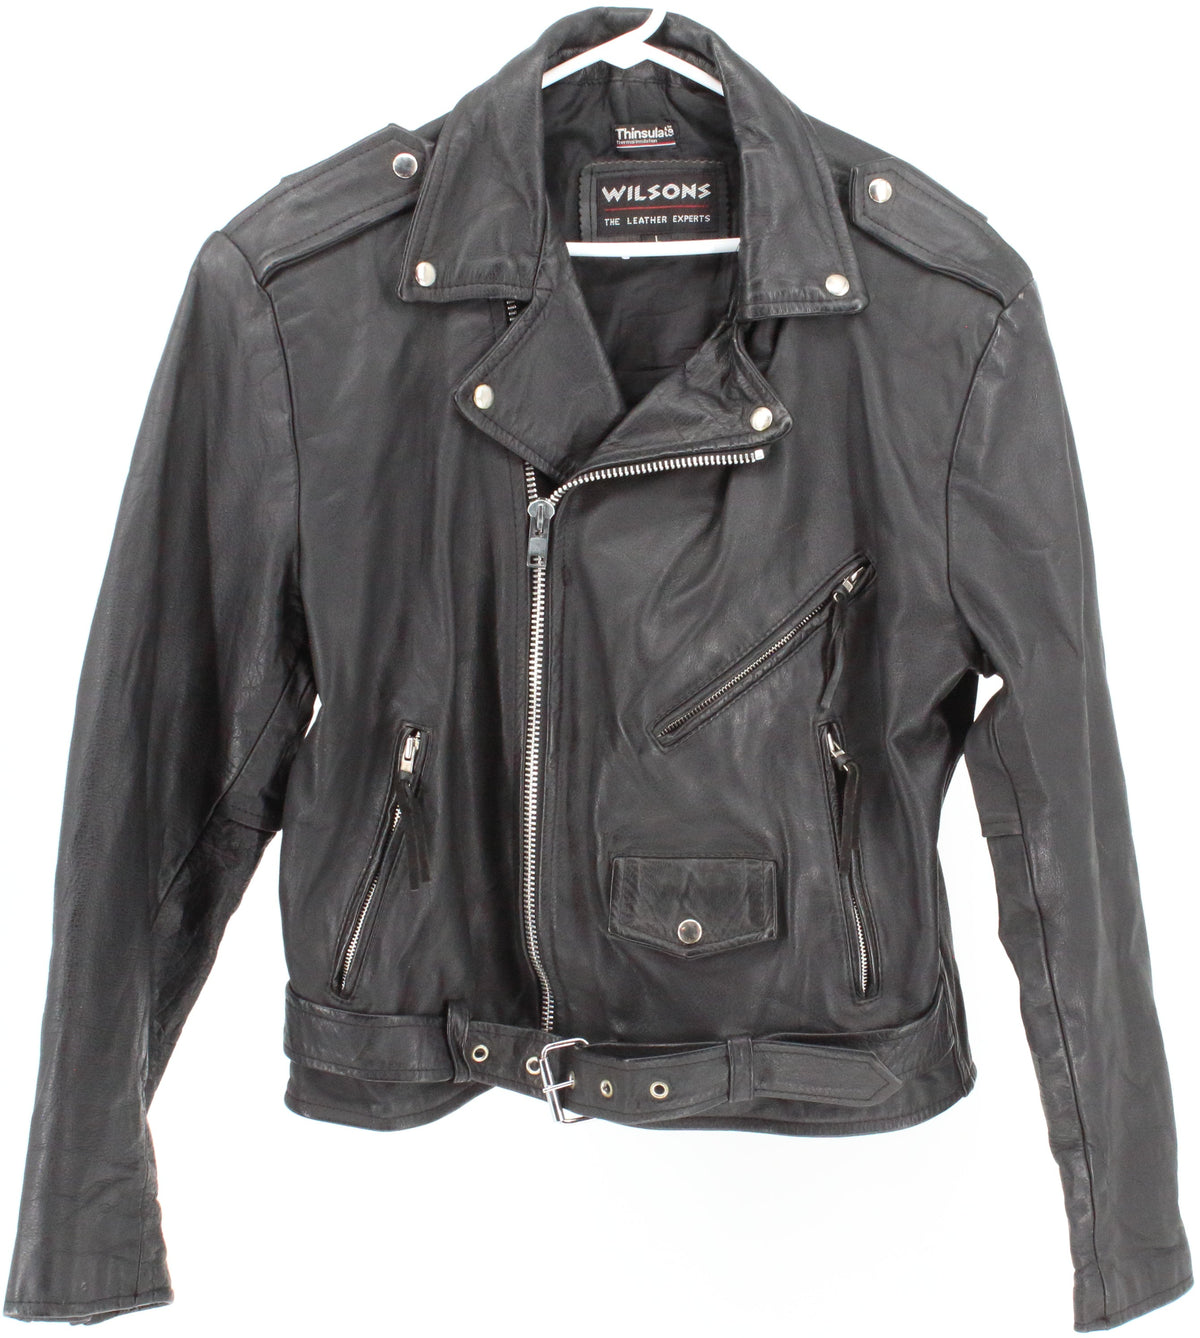 Wilsons Thinsulate Black Biker Leather Jacket